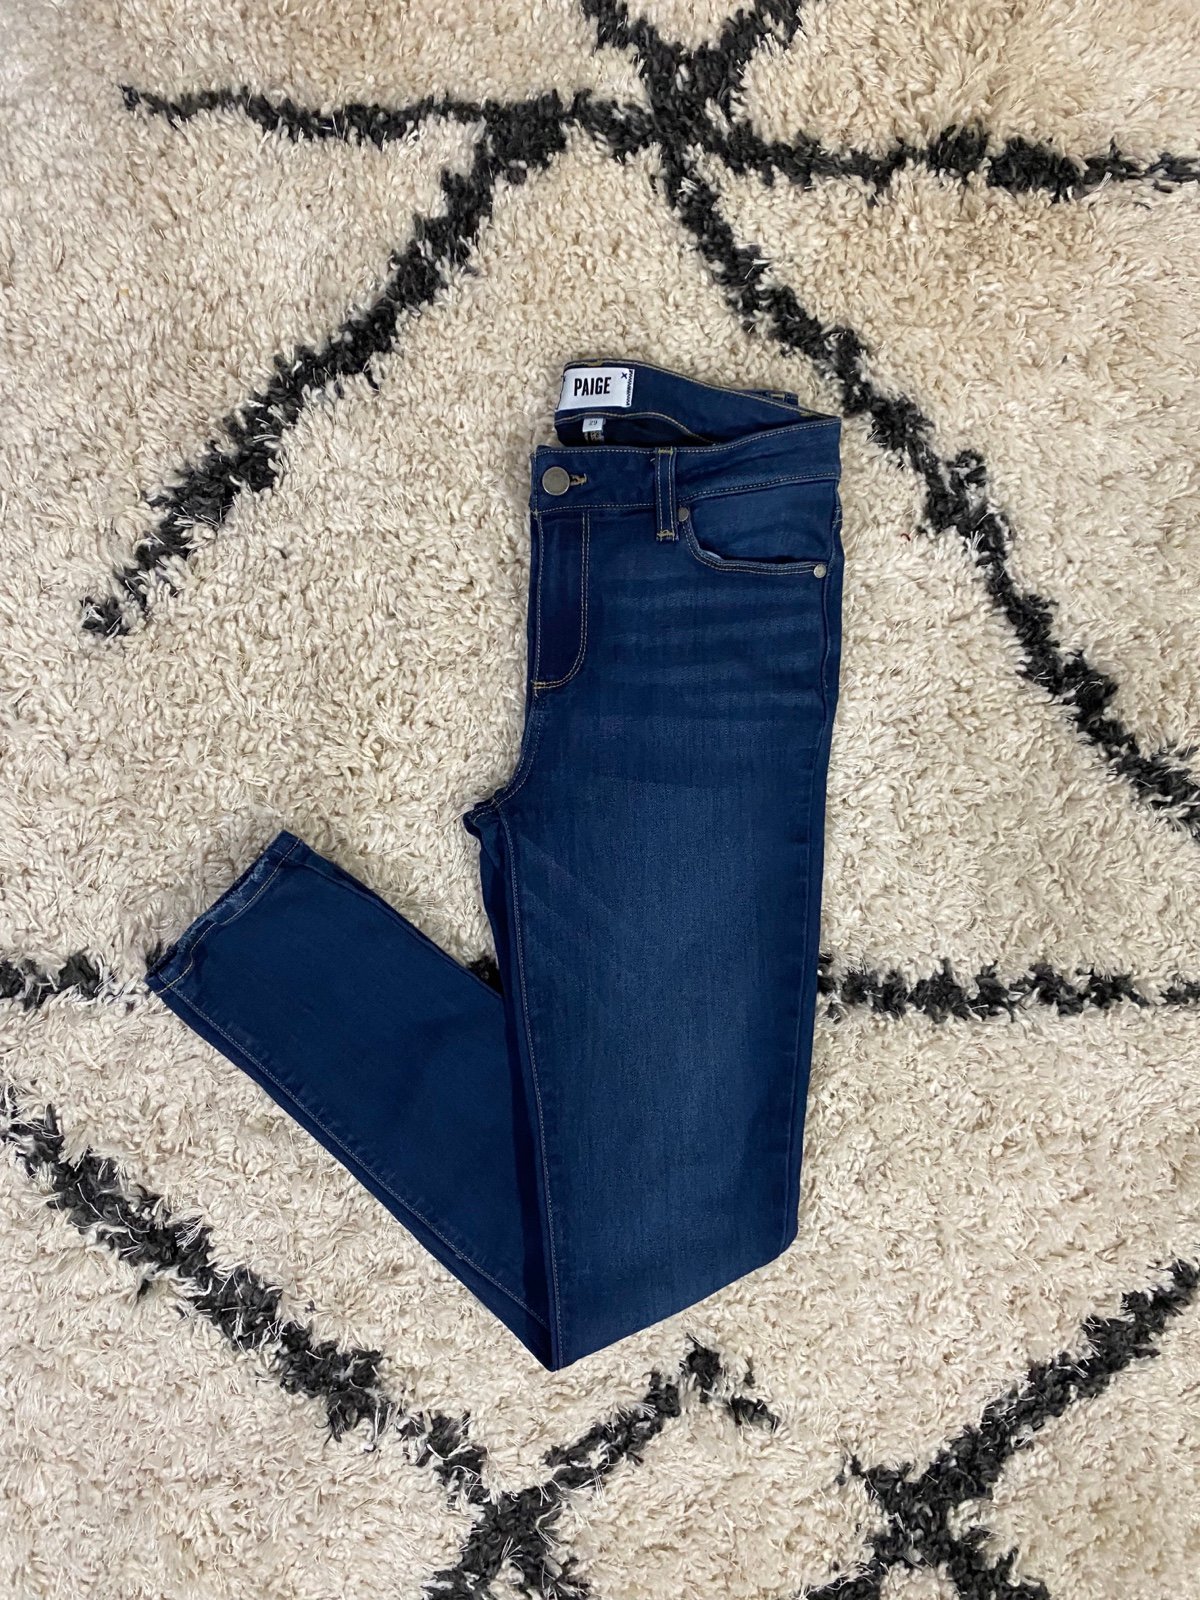 High quality Paige Howard Skyline Skinny Jeans ion4EvZf7 for sale